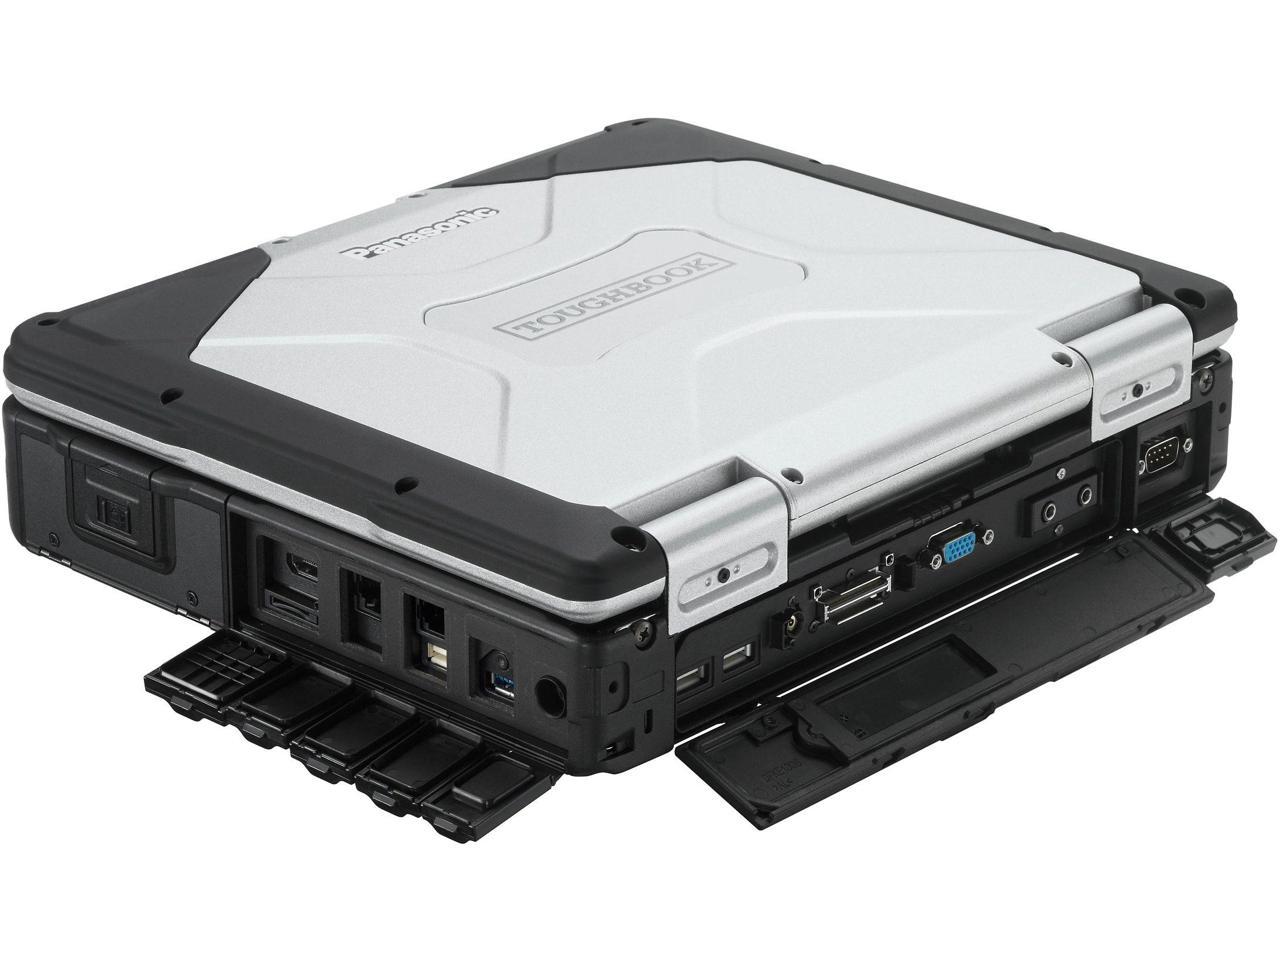 Panasonic Toughbook CF-31 MK2, Fully Rugged Laptop, Intel Core i5-2520M @ 2.50GHz, 13.3